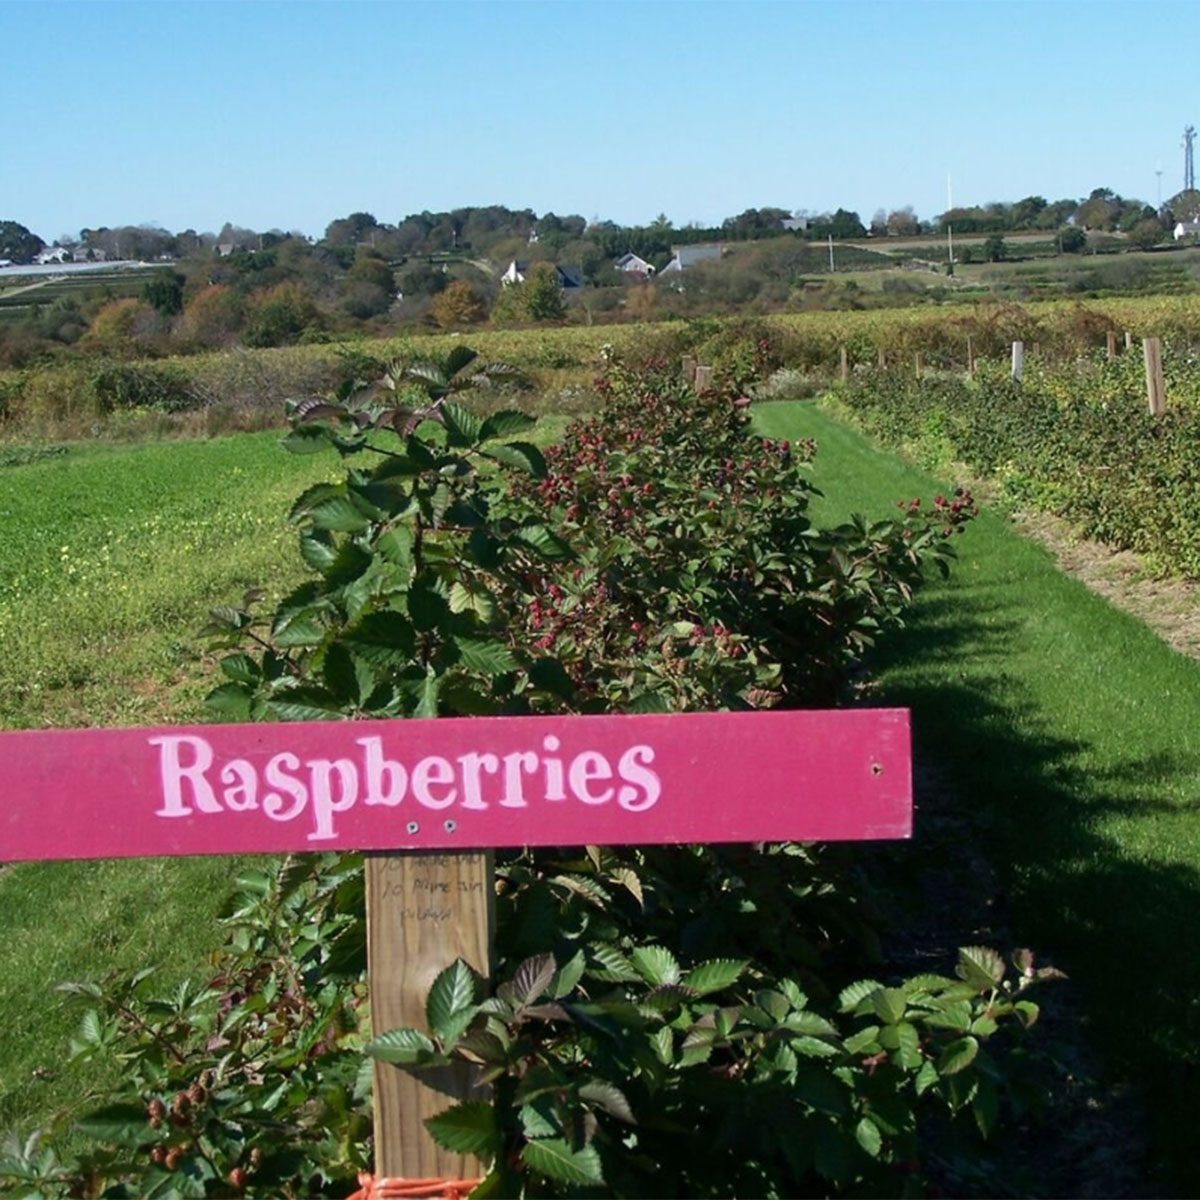 Sweet Berry Farm raspberries